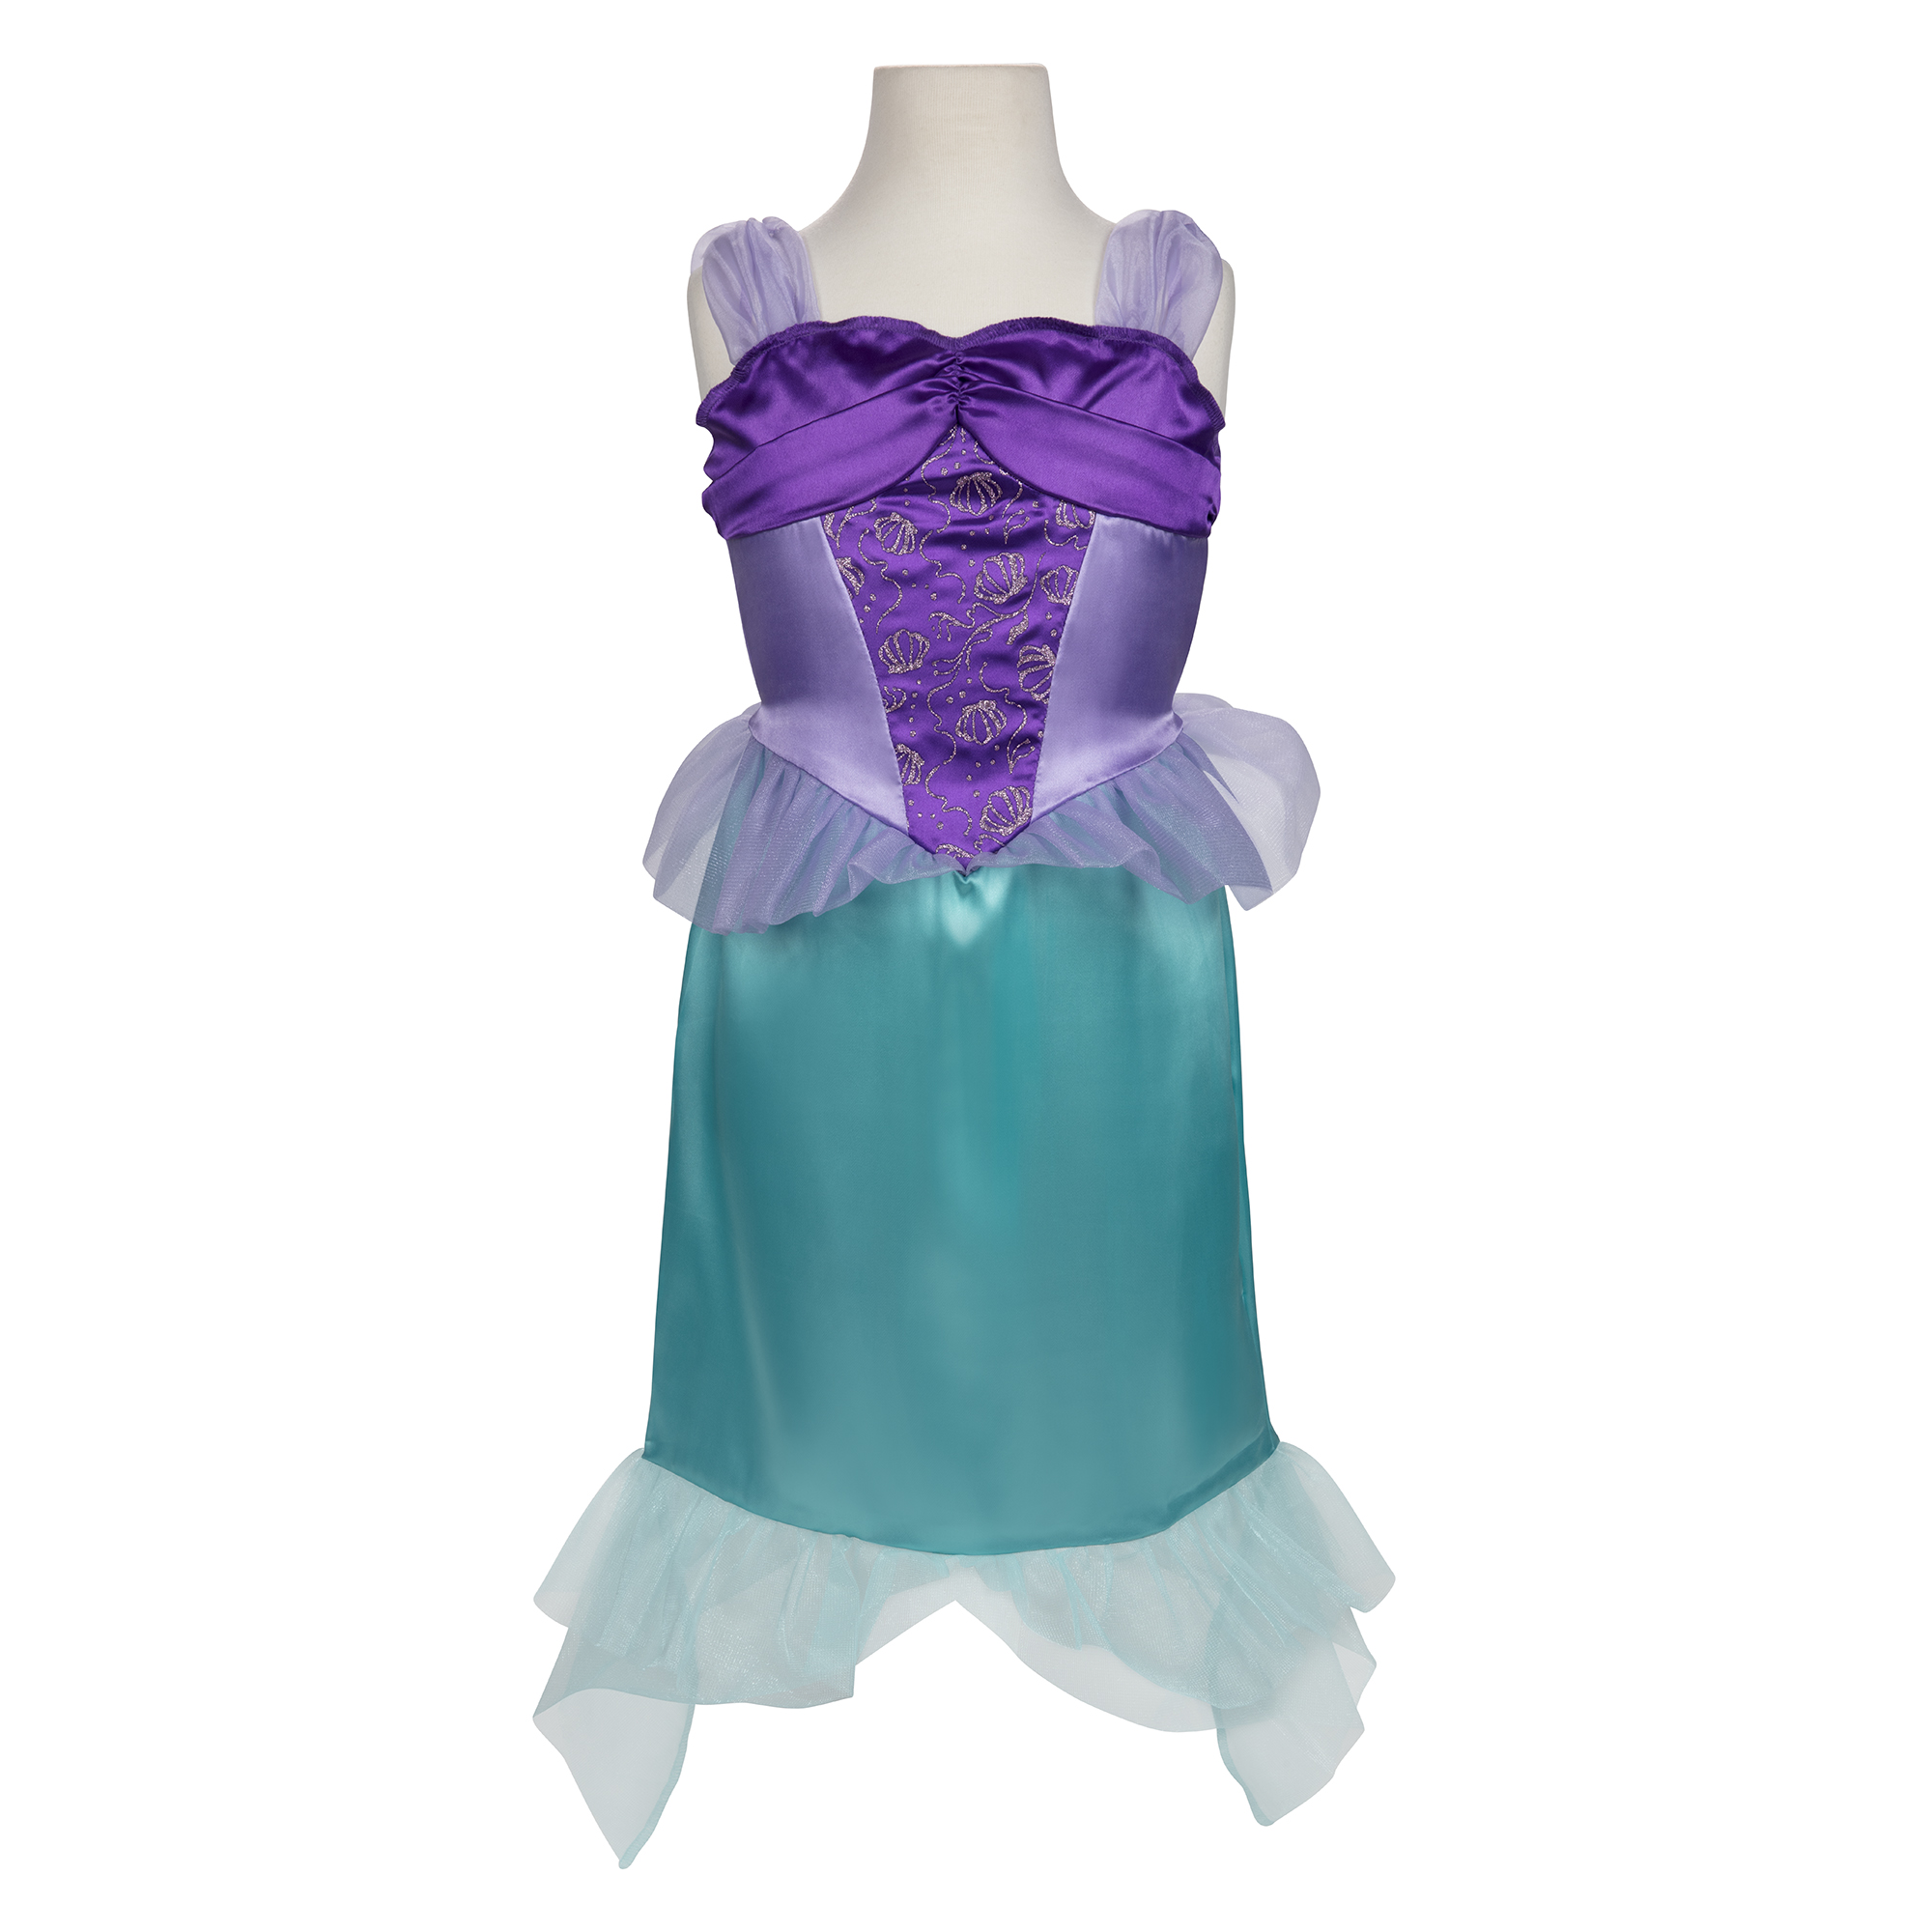 Disney Princess My Friend Ariel Doll with Child Size Dress Gift Set - image 3 of 8